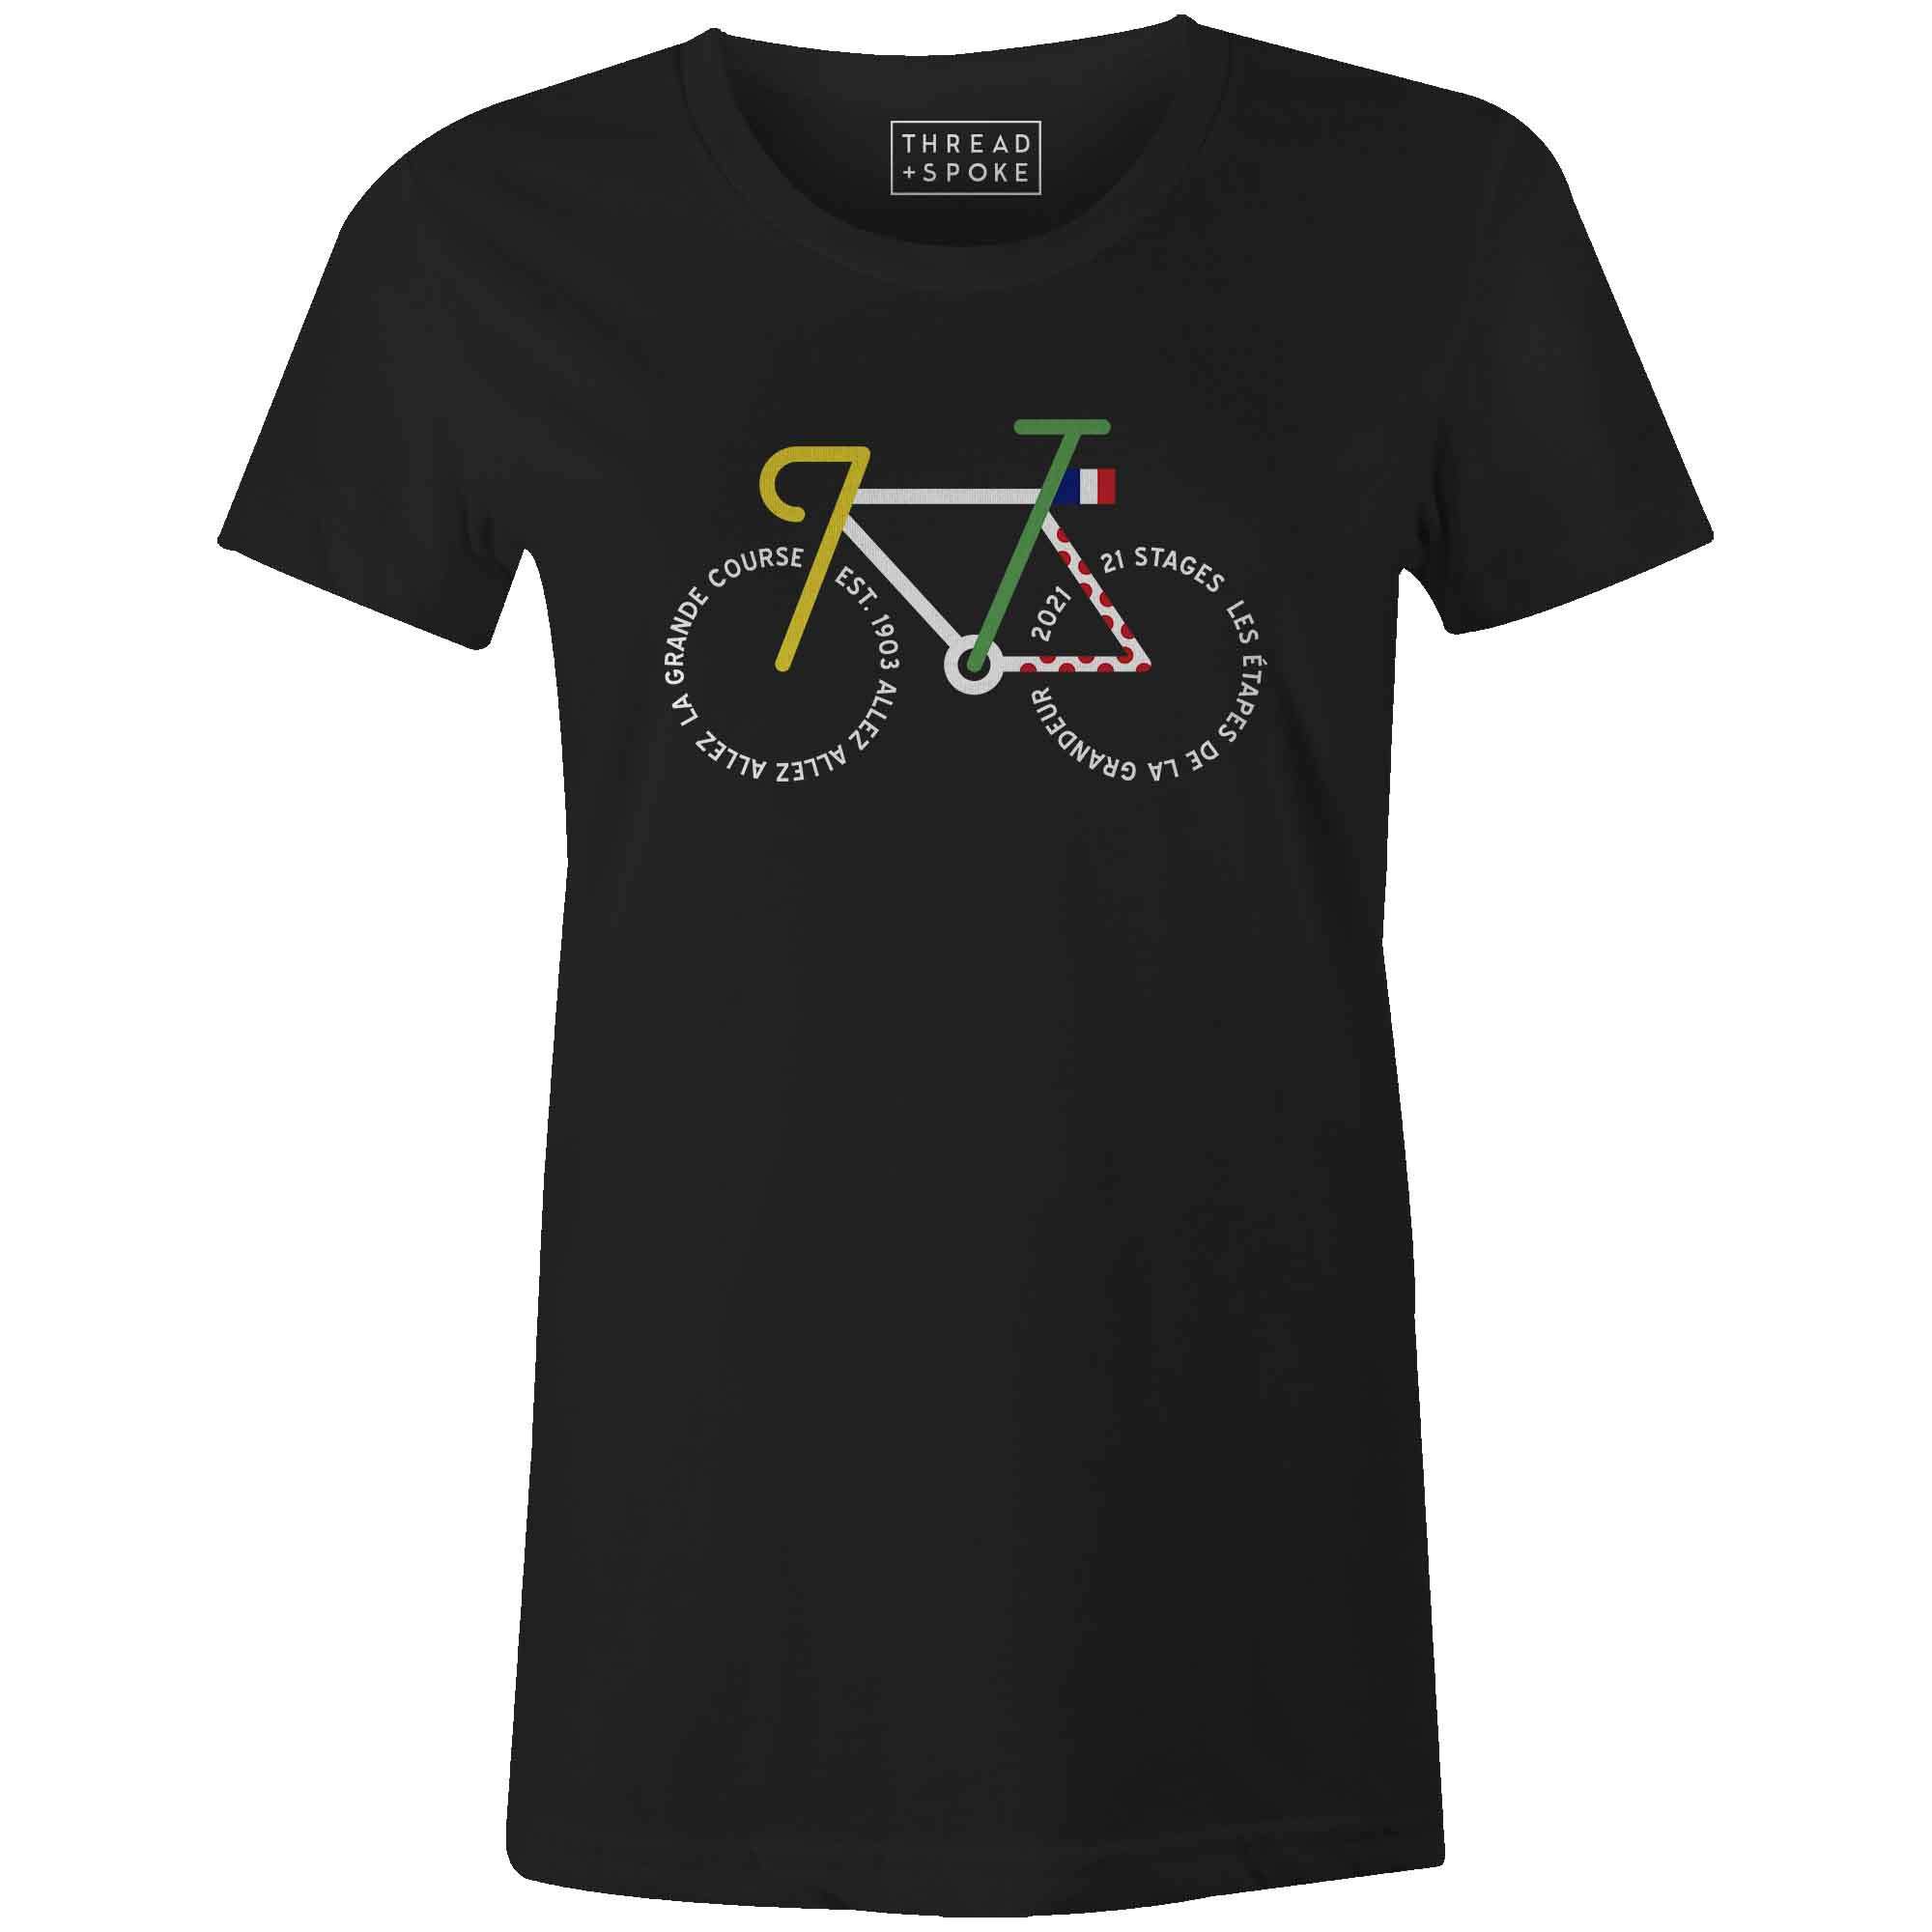 Women's T-shirt - Le Tour Bike